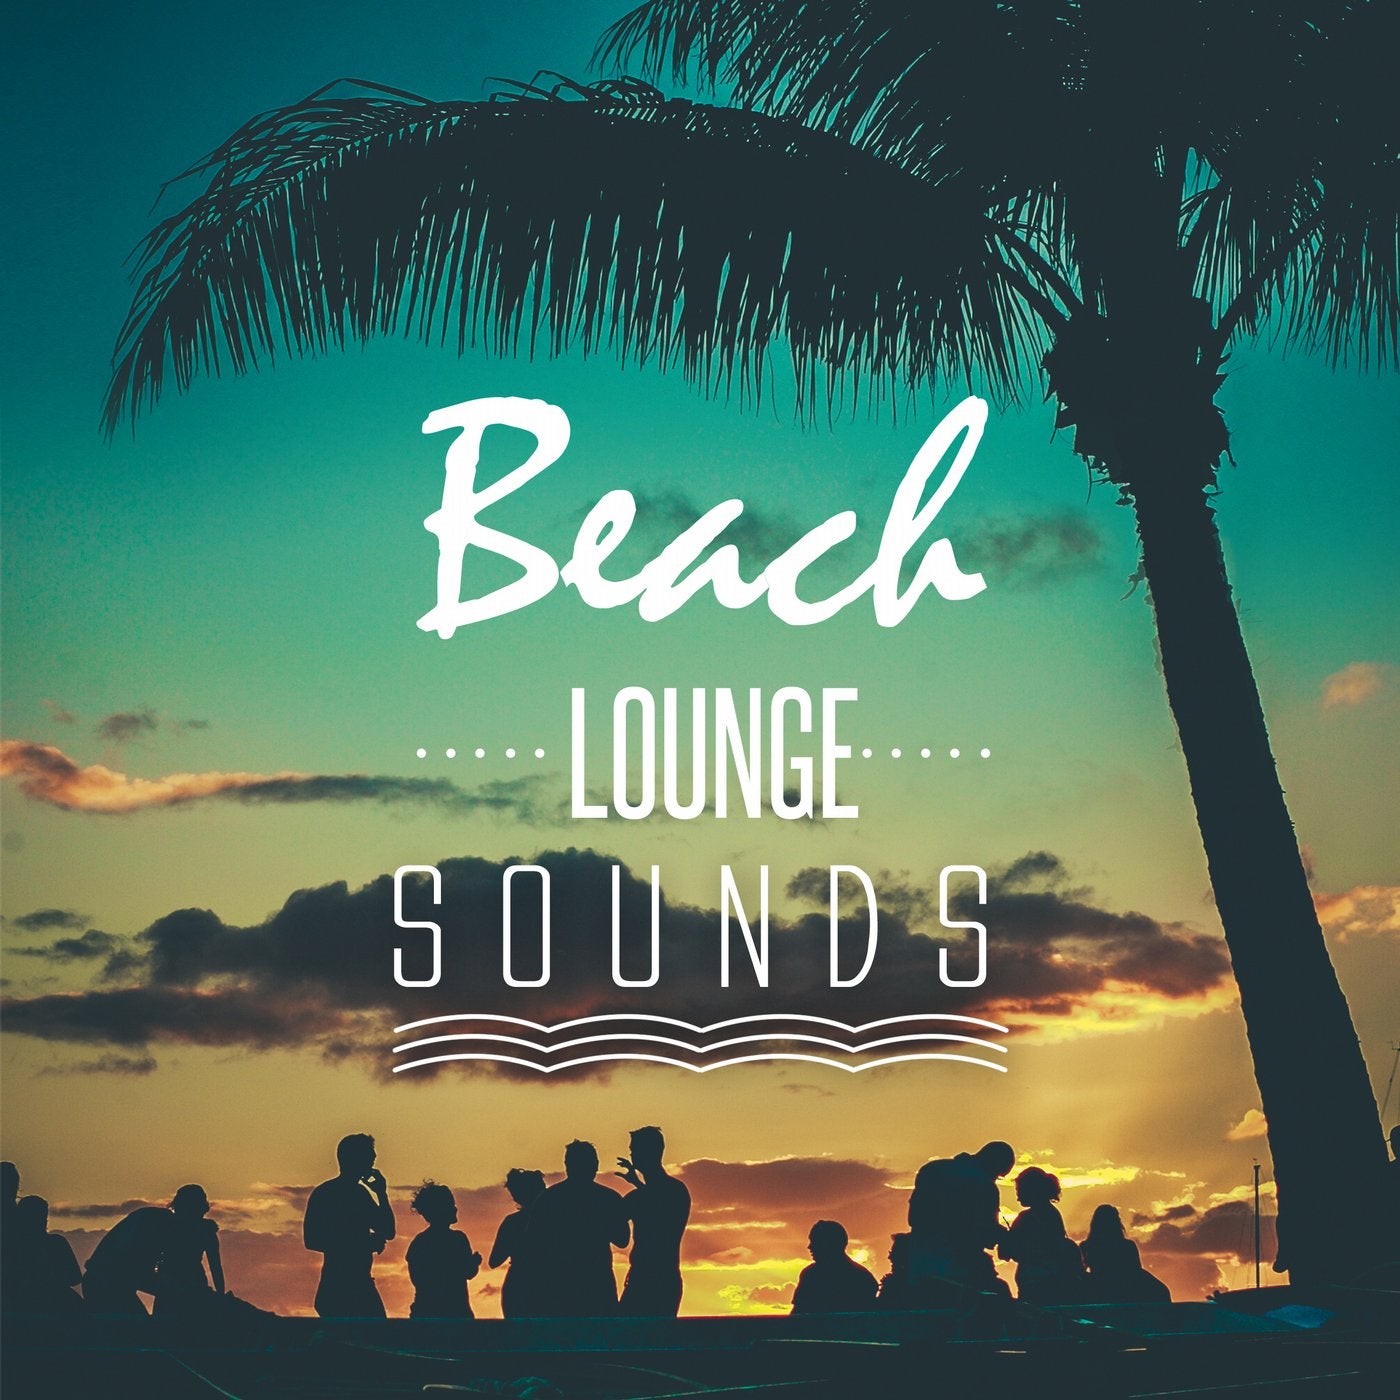 Beach Lounge Sounds